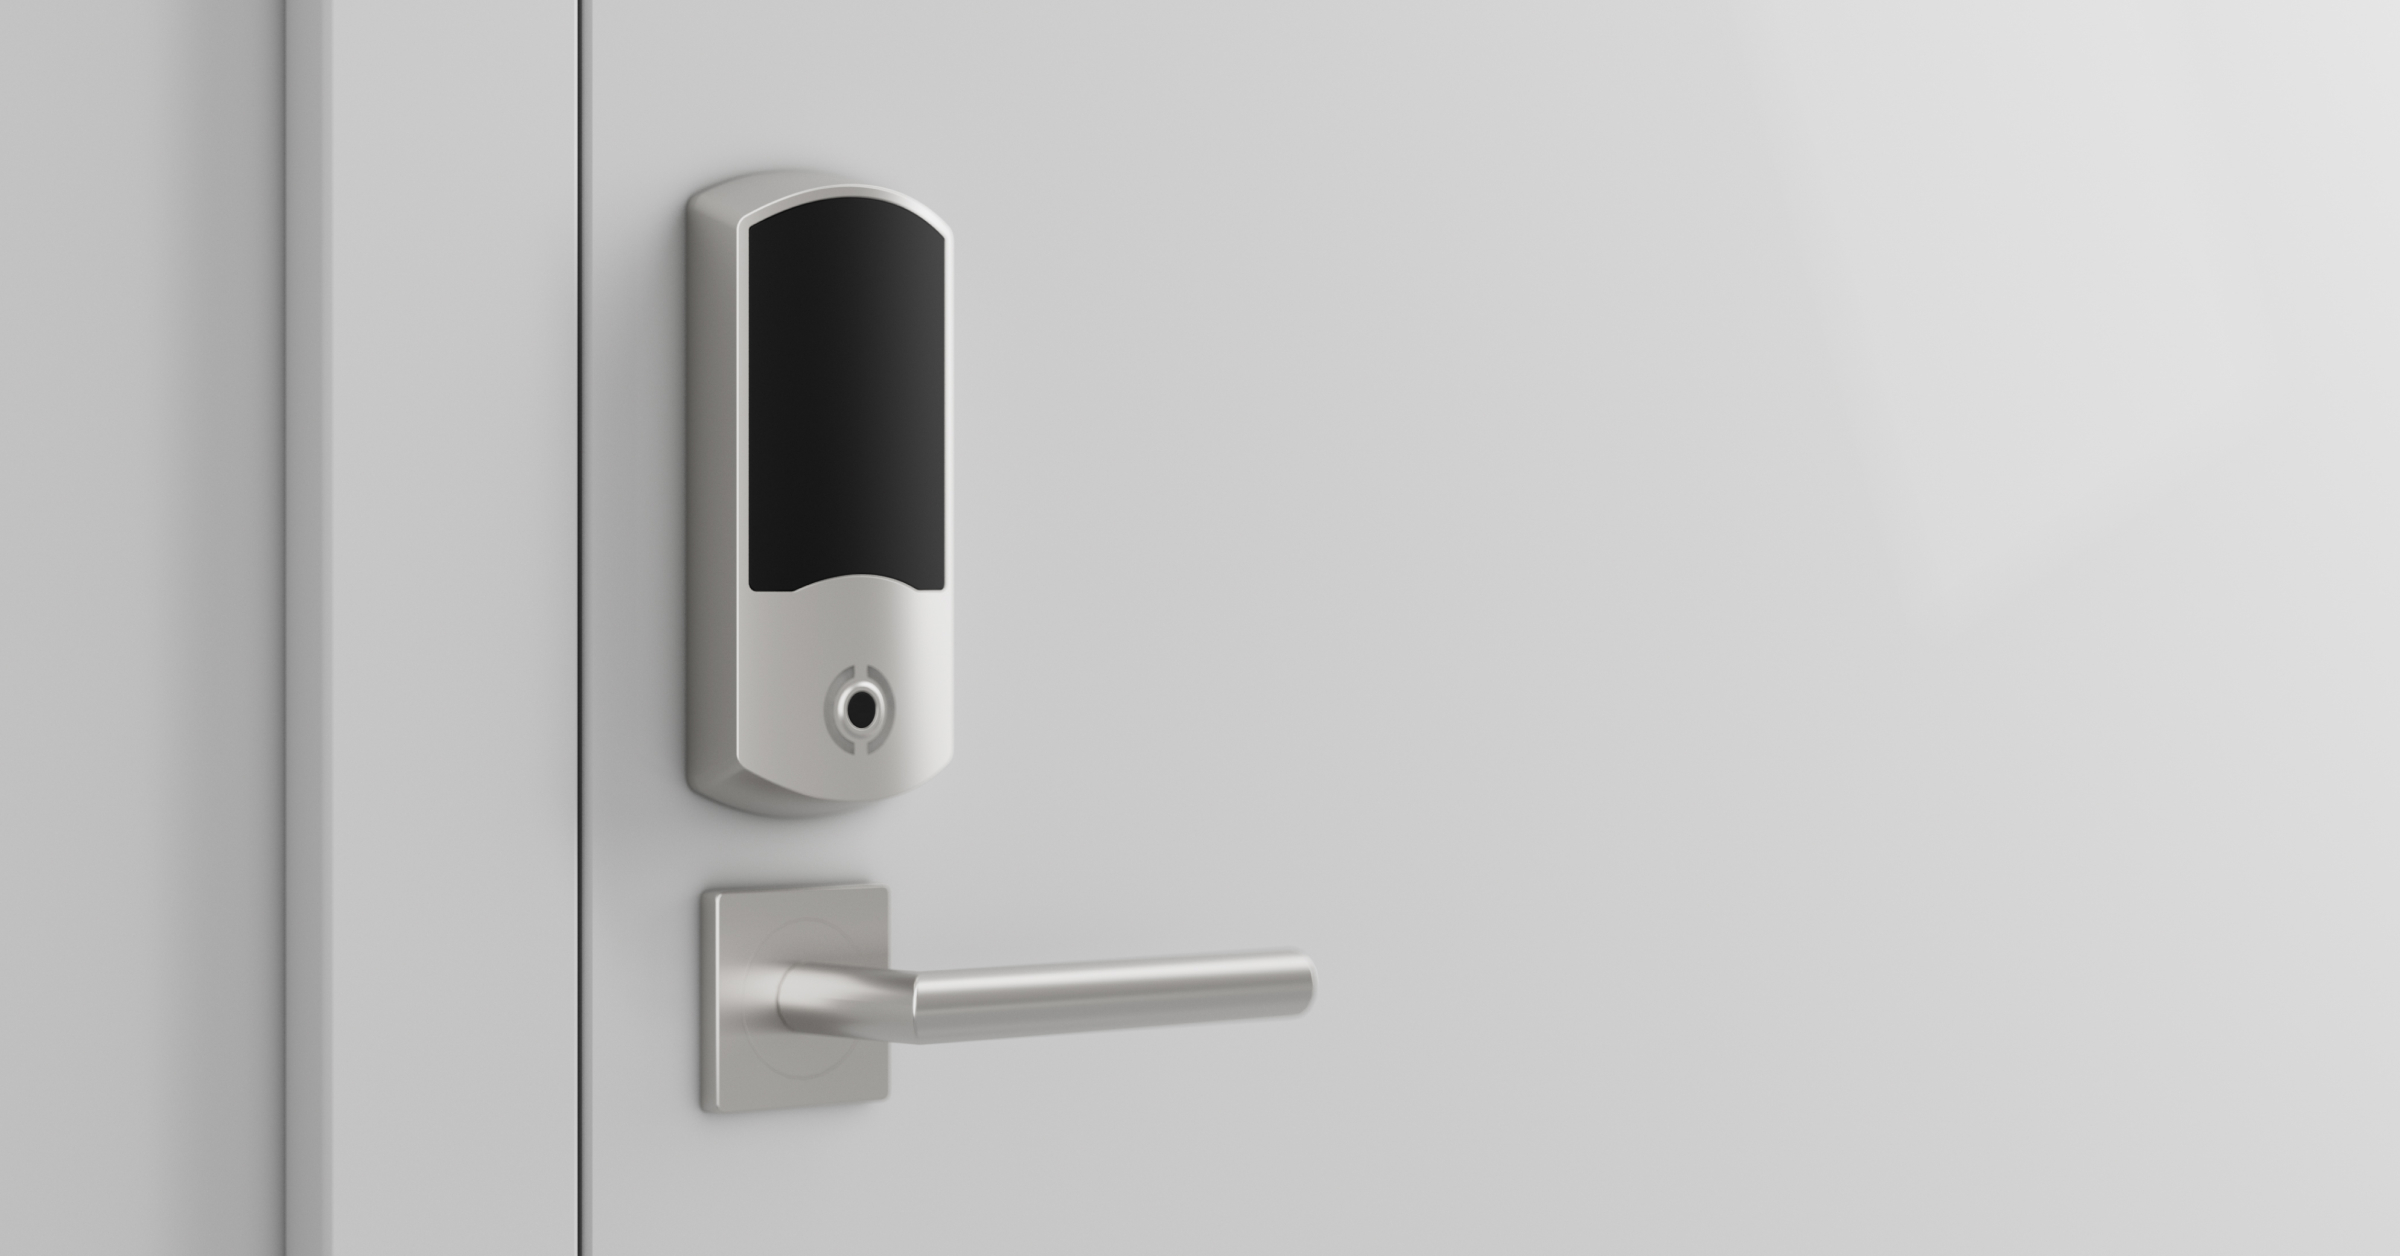 cloud-based access control - wireless door locks